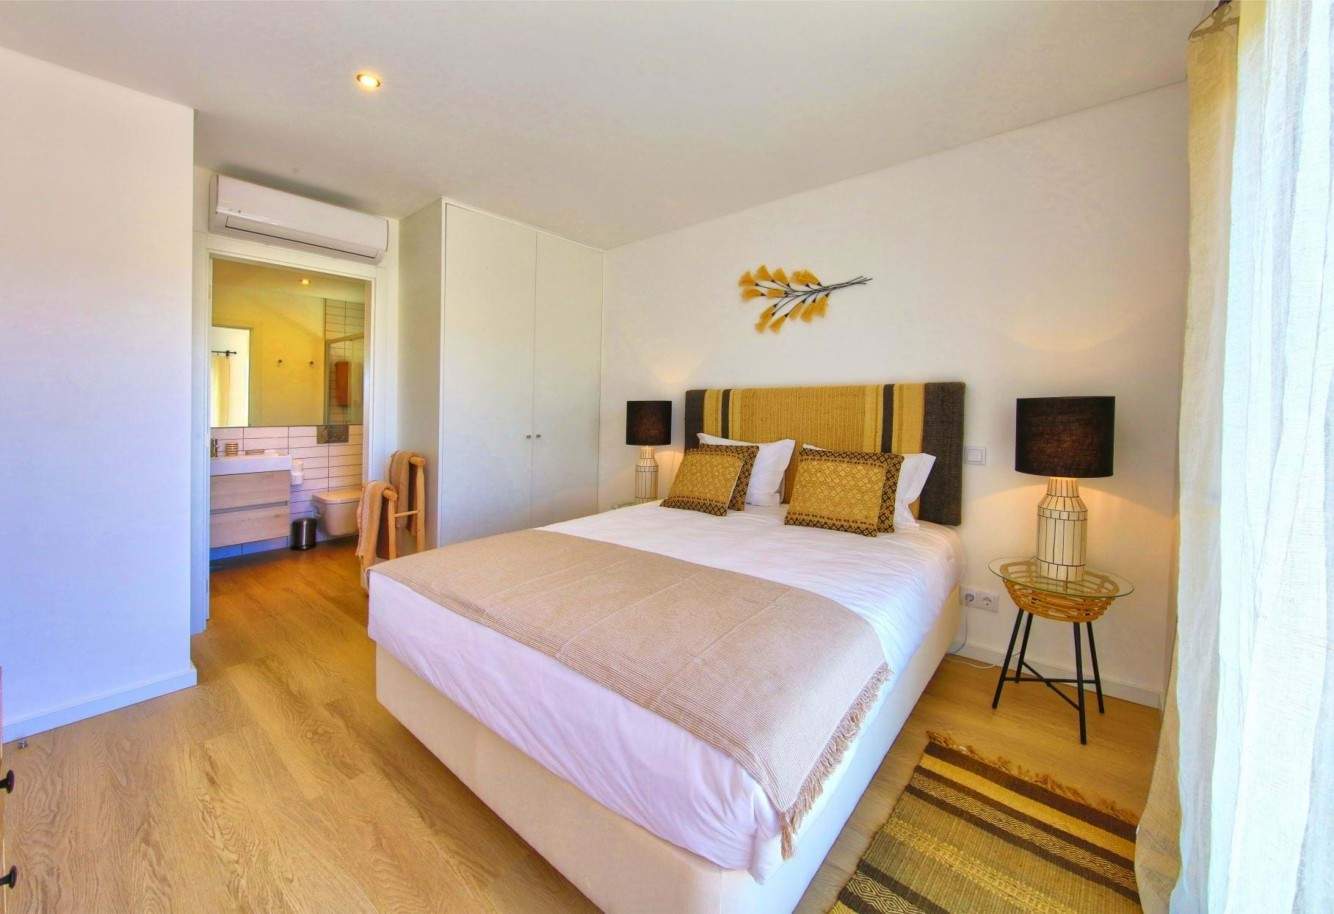 2+1 bedroom villa in resort, for sale in Carvoeiro, Algarve_204839